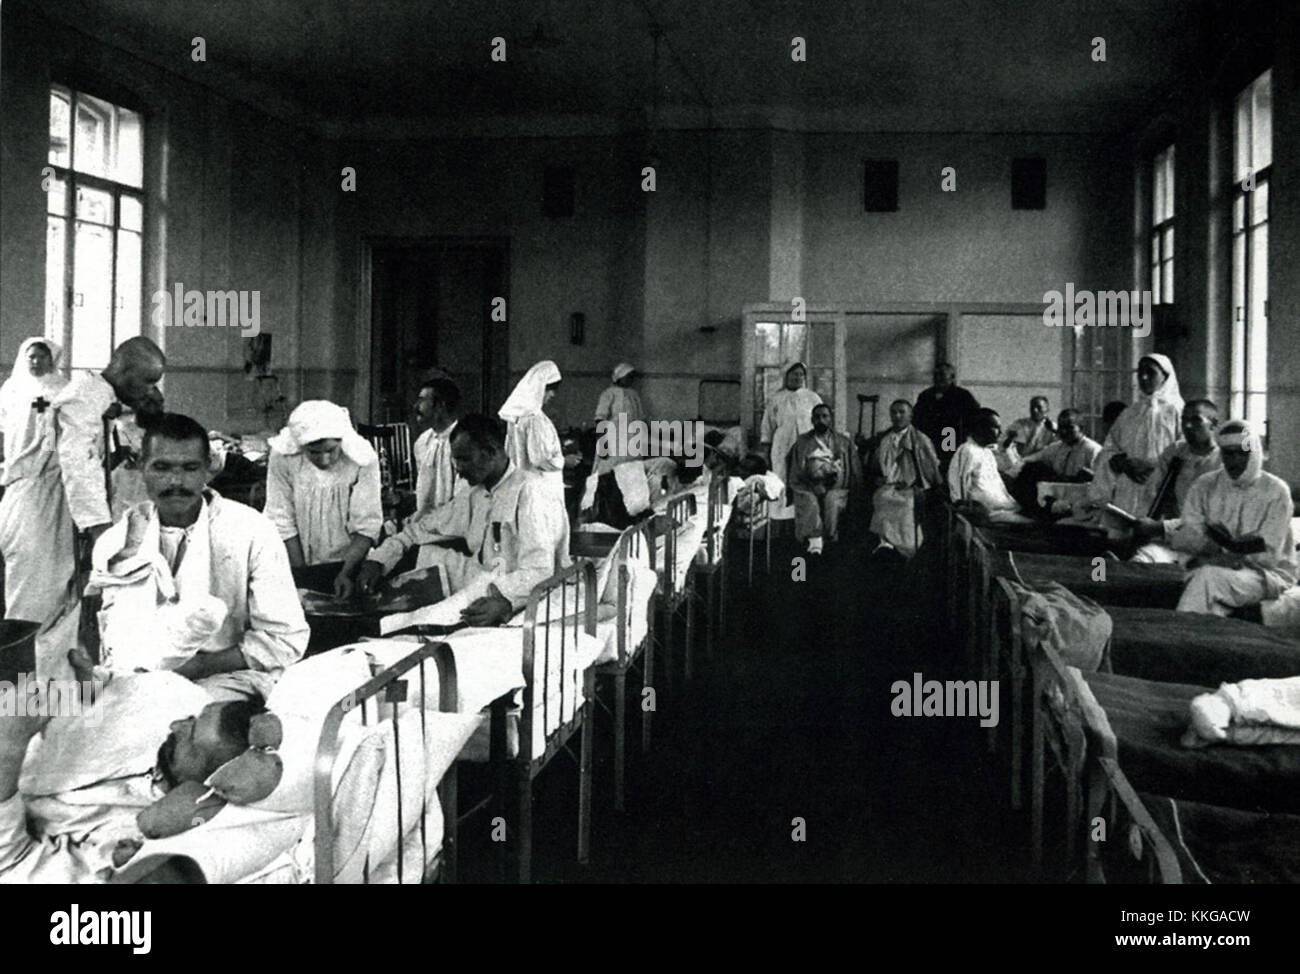 Госпиталь картинки. Военный госпиталь СССР. Военный госпиталь 19 век.